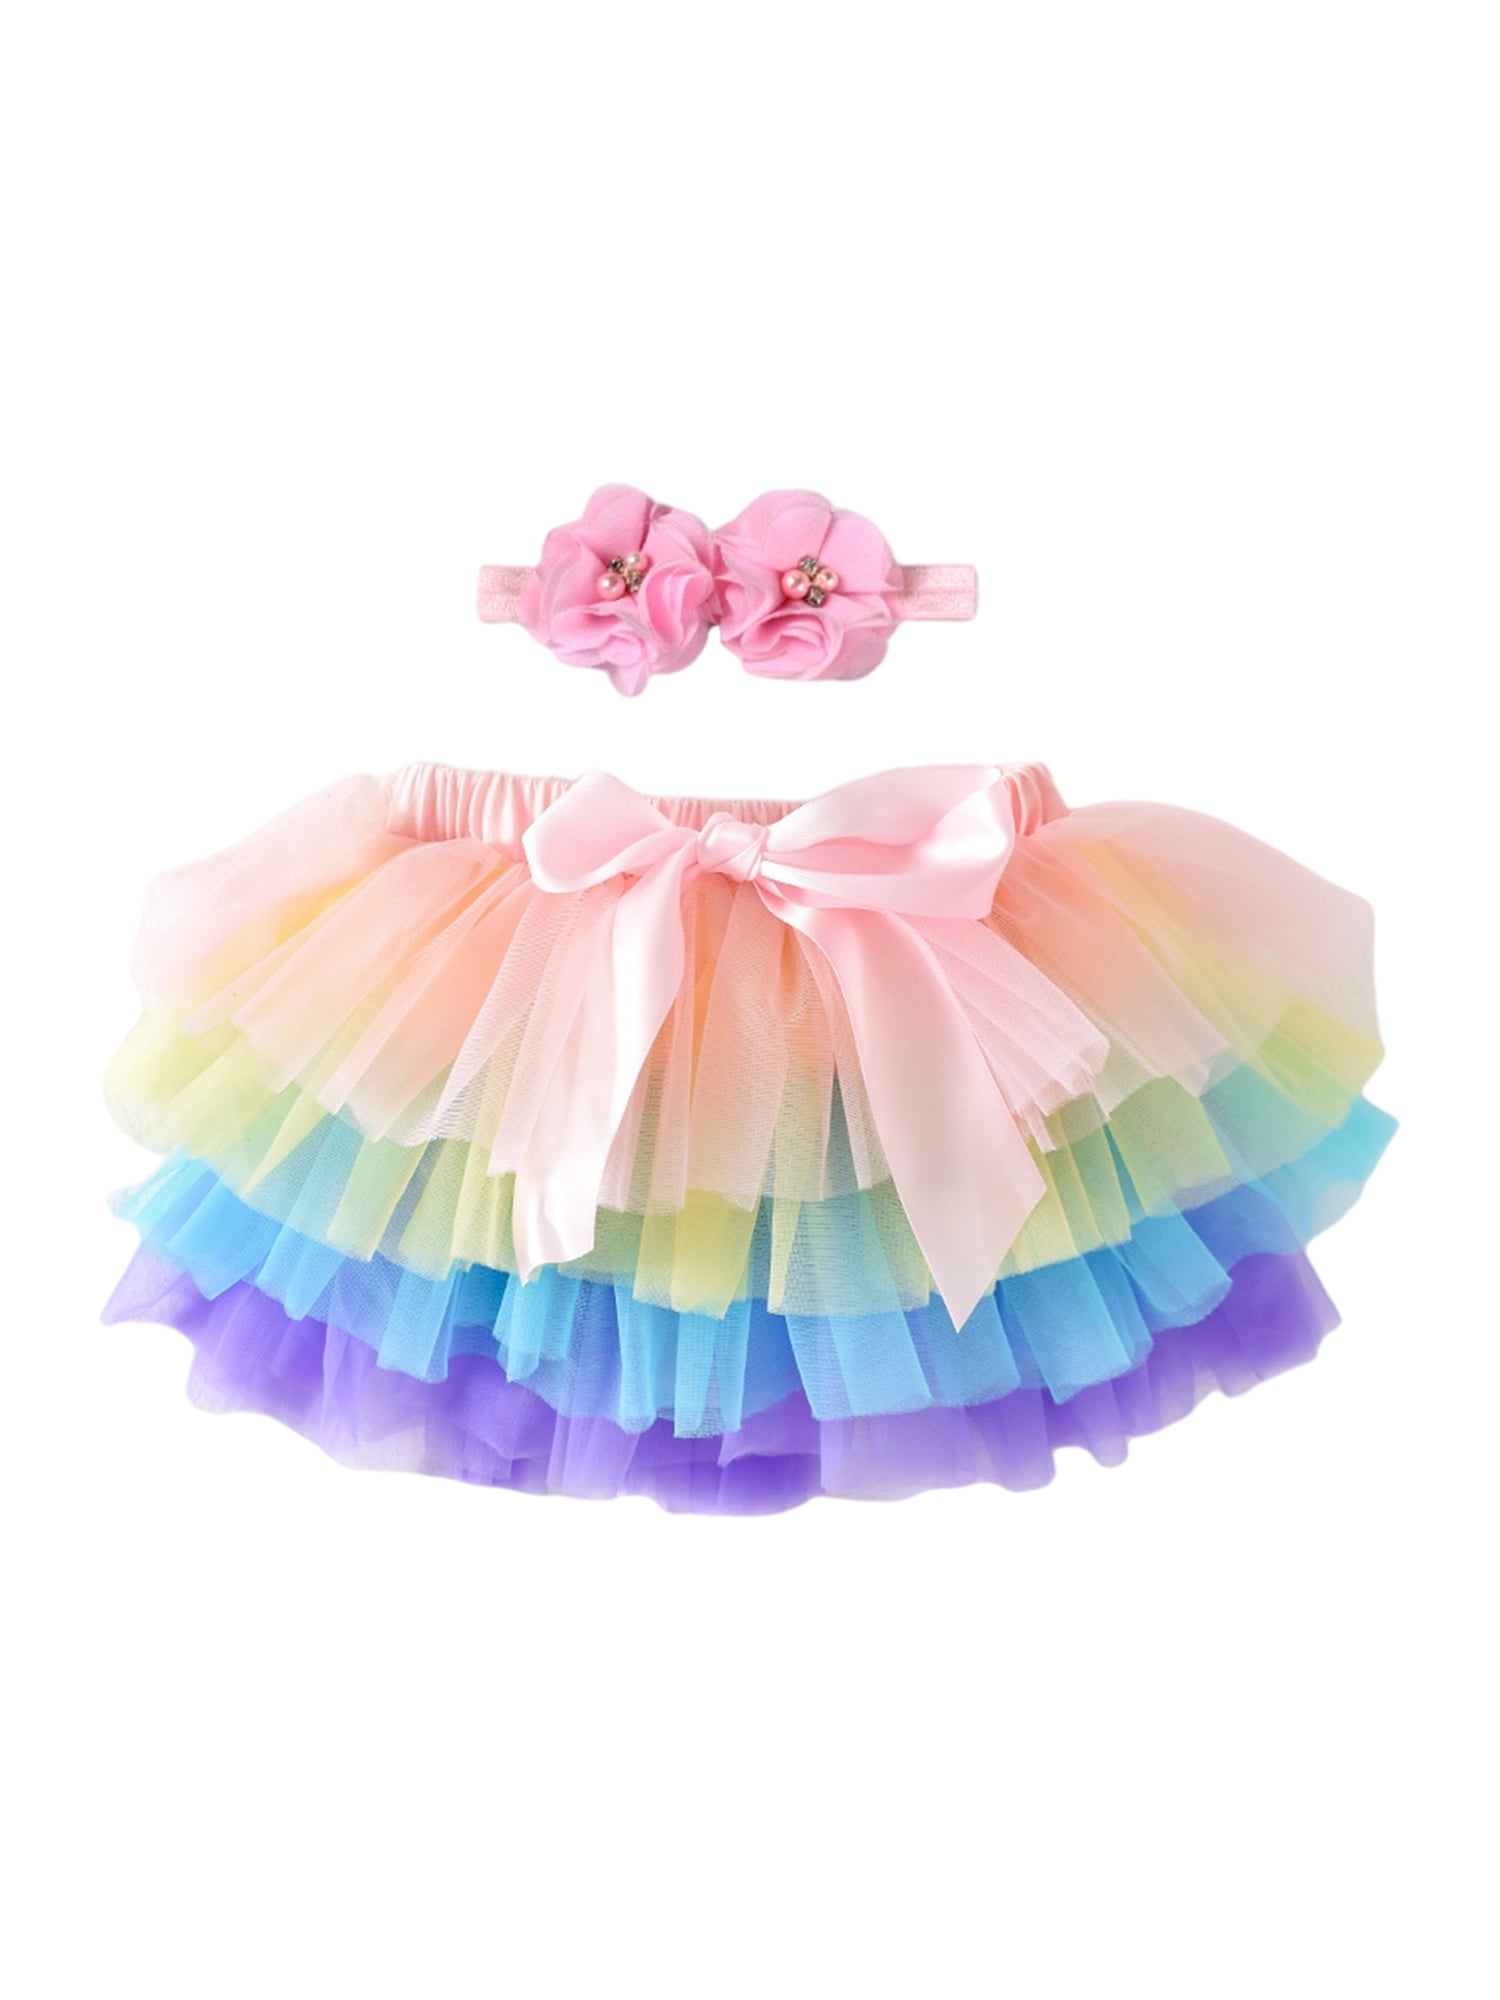 Tulle Tutu Skirt Dress 2PCS Set Toddler Kids Baby Girls Outfits Clothes T-shirt 